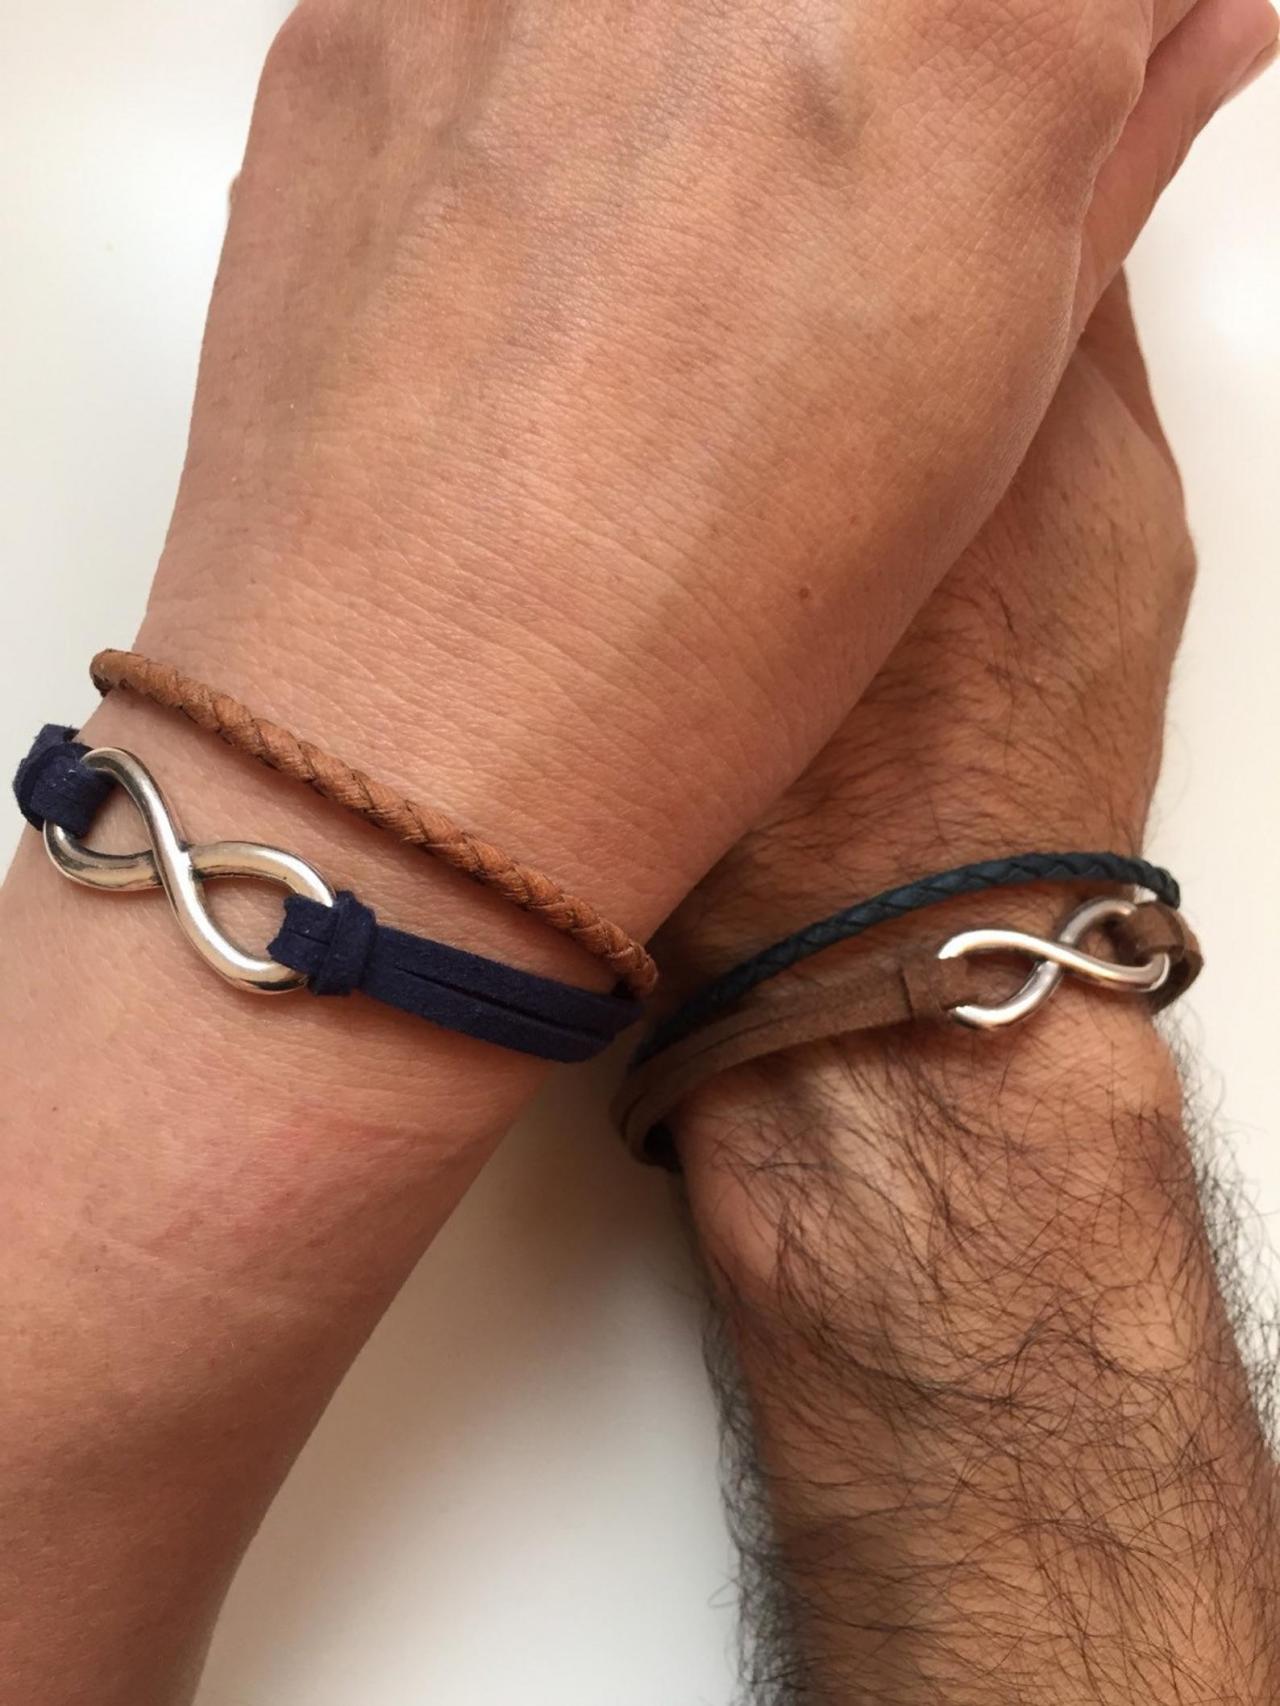 Couples Women Men Bracelets 216- Friendship Love Cuff Infinity Yin And Yang Bracelet Leather Braid Gift Adjustable Current Trendy Innovative